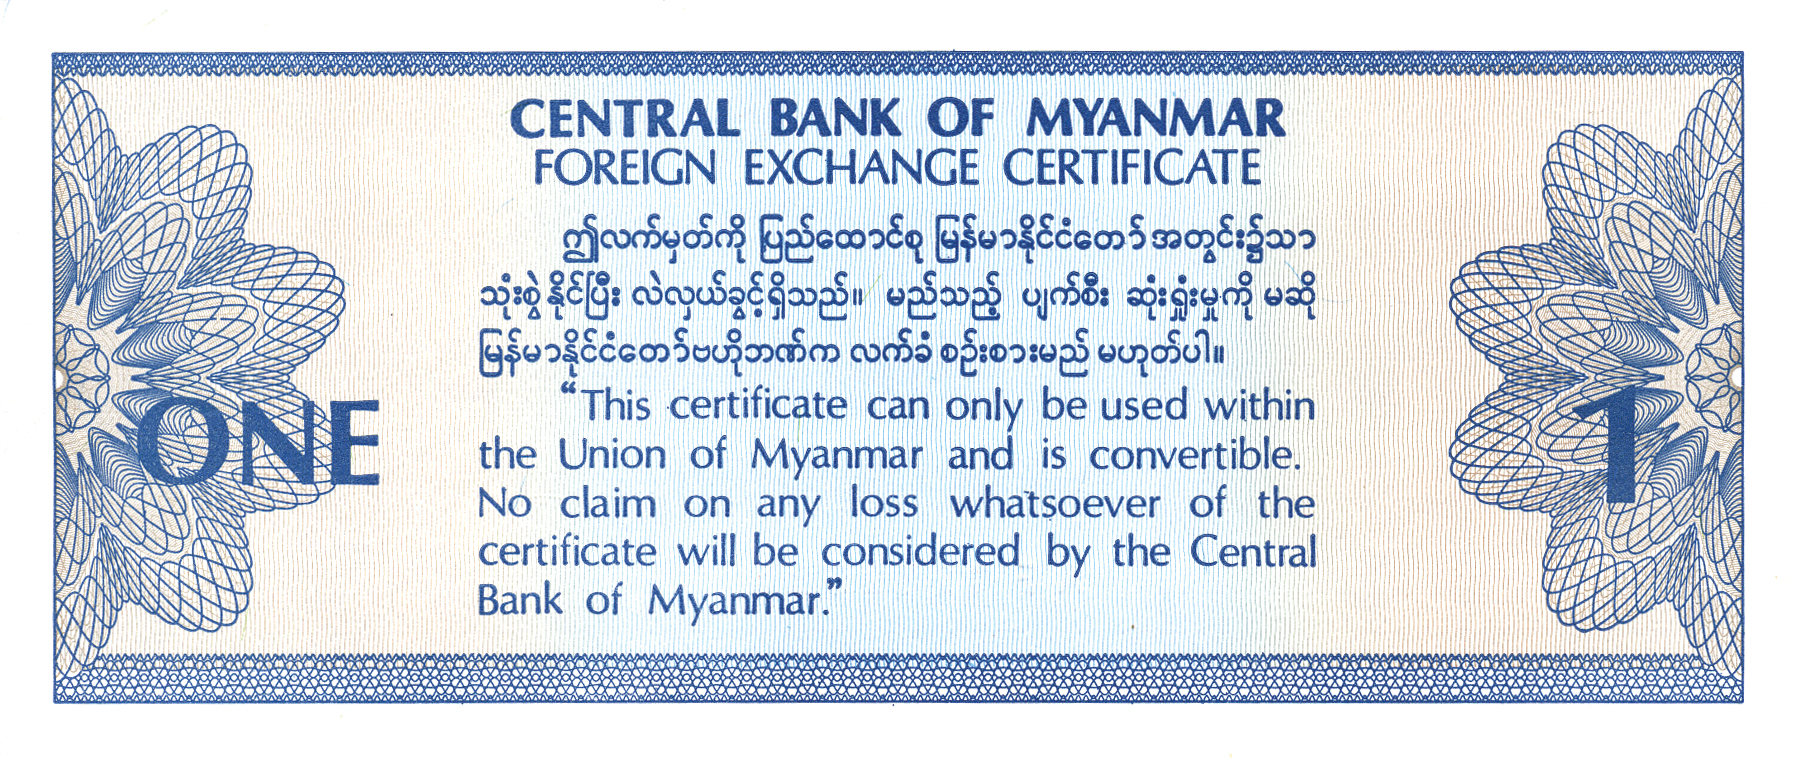 Купюры государства Мьянма. Купюра Мьянма 1. Мьянма банк. Foreign Exchange Certificate.